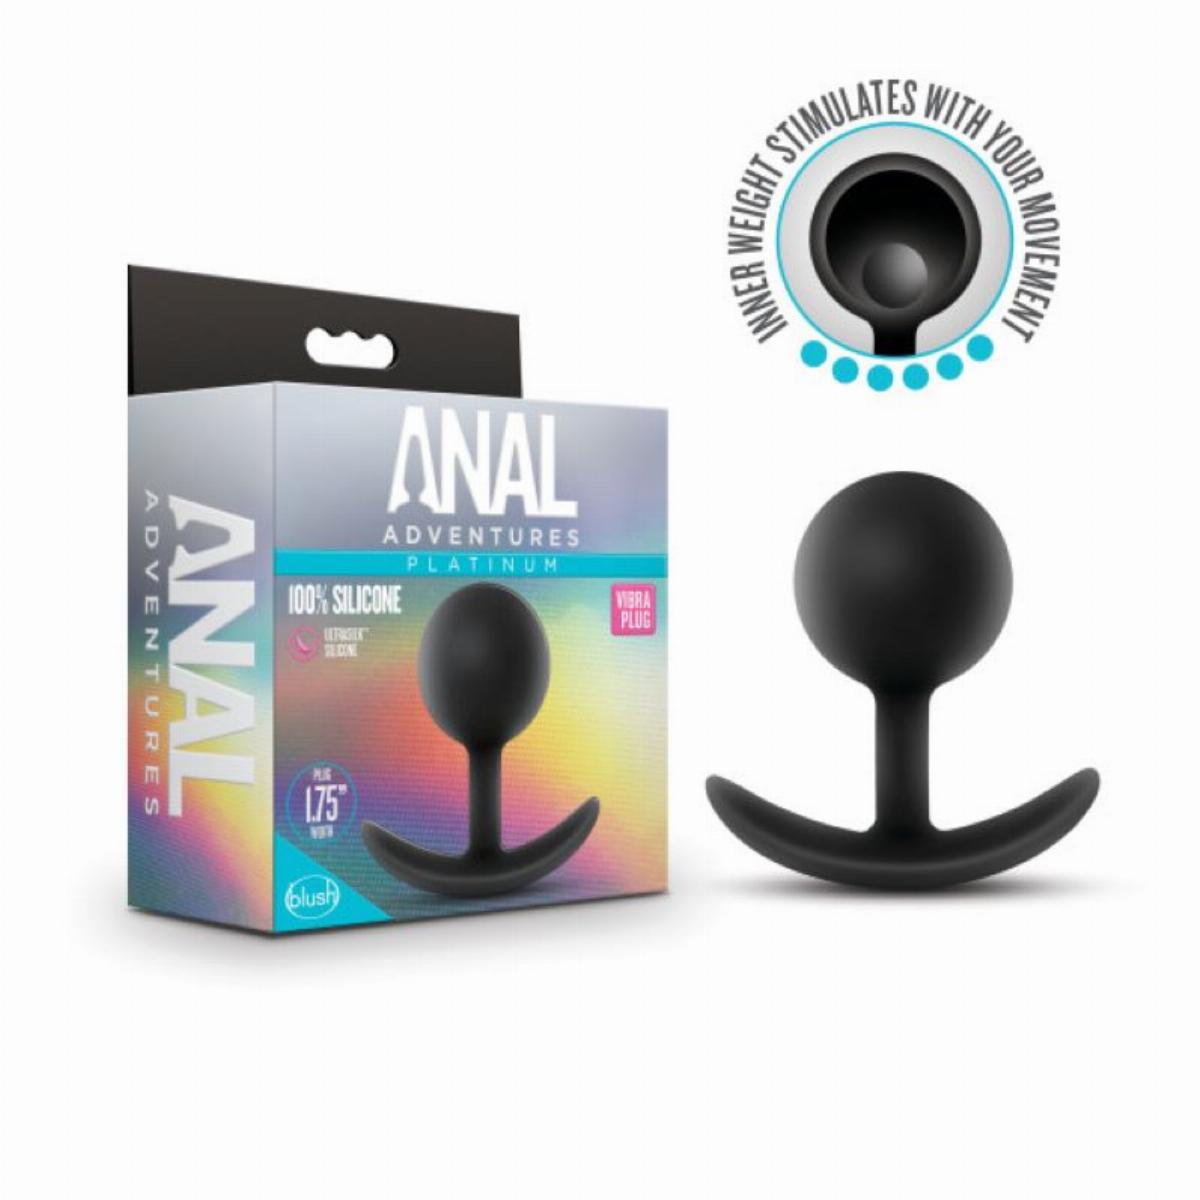 Anal Adventures - Vibra Plug - Analplug